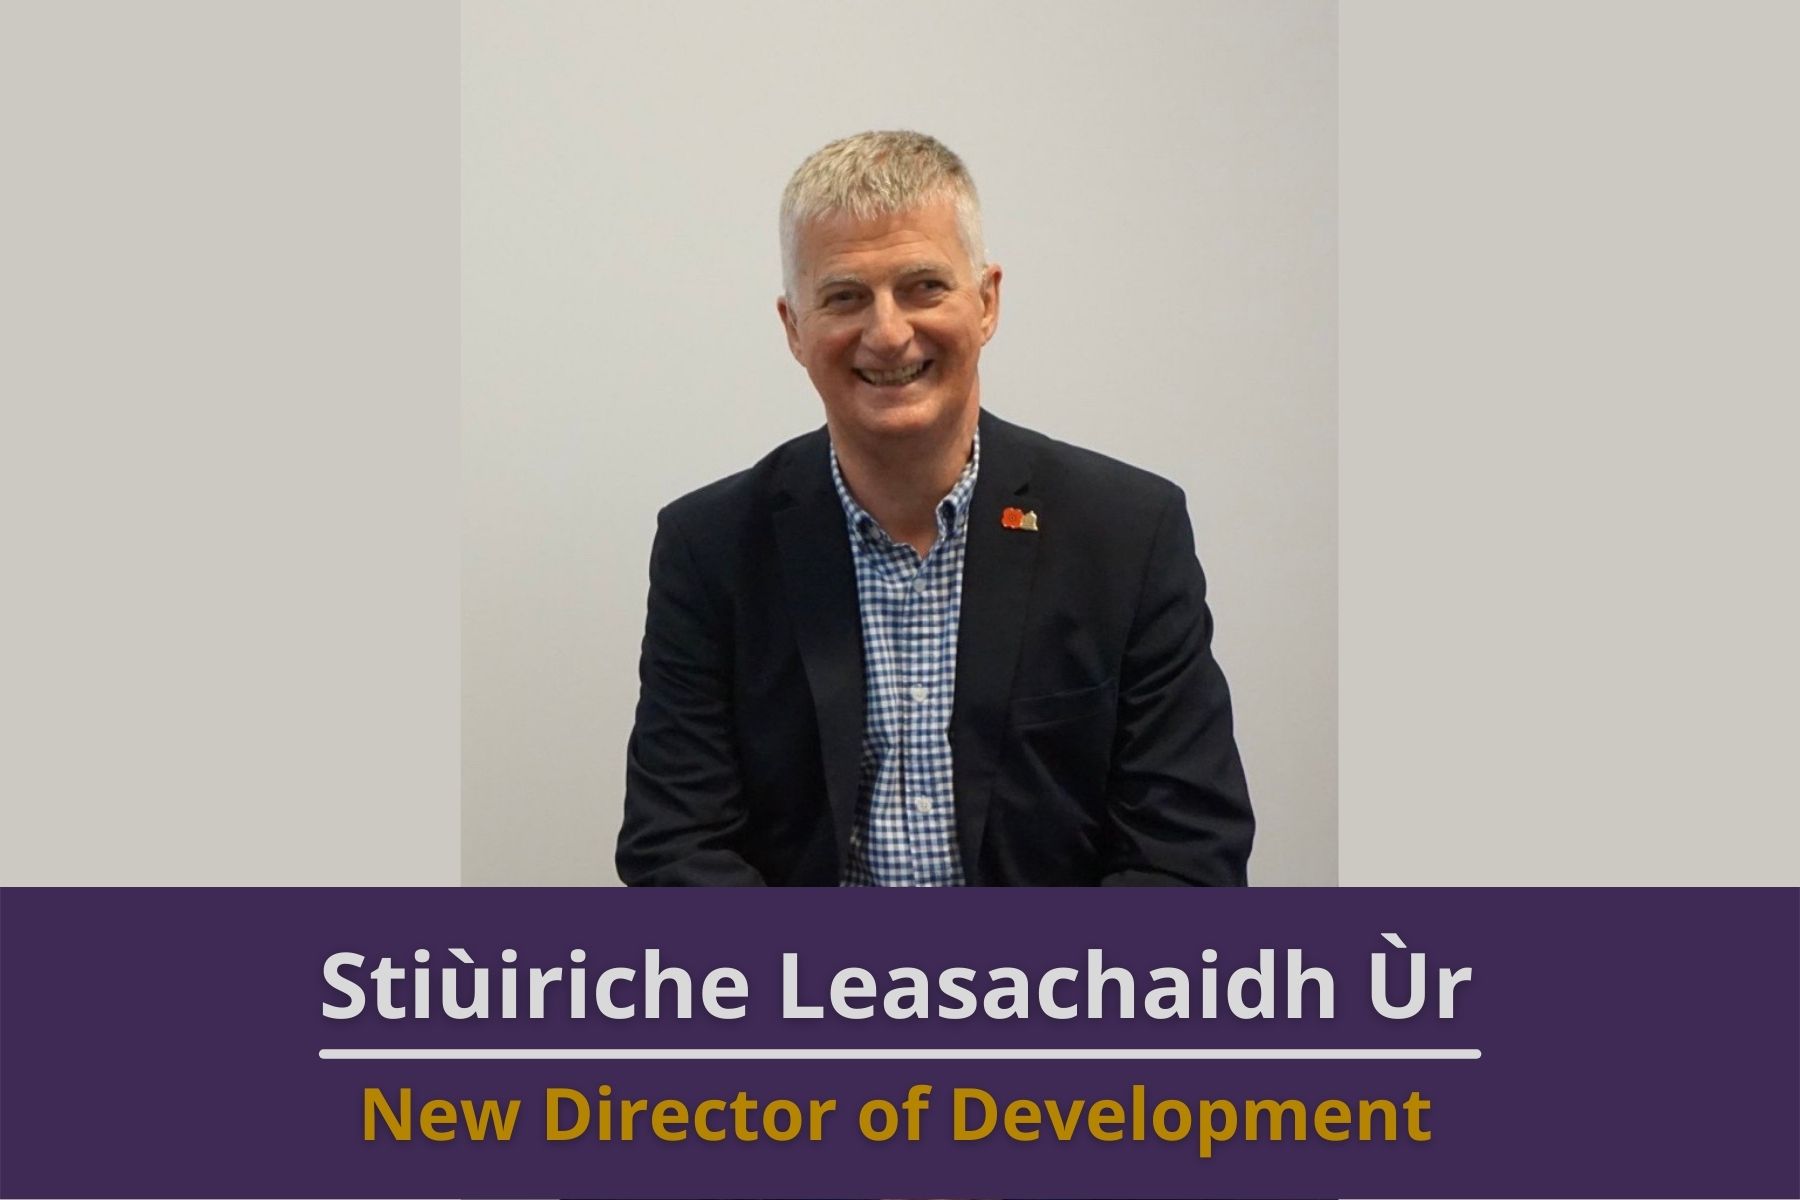 Bòrd na Gàidhlig Welcomes New Director of Development